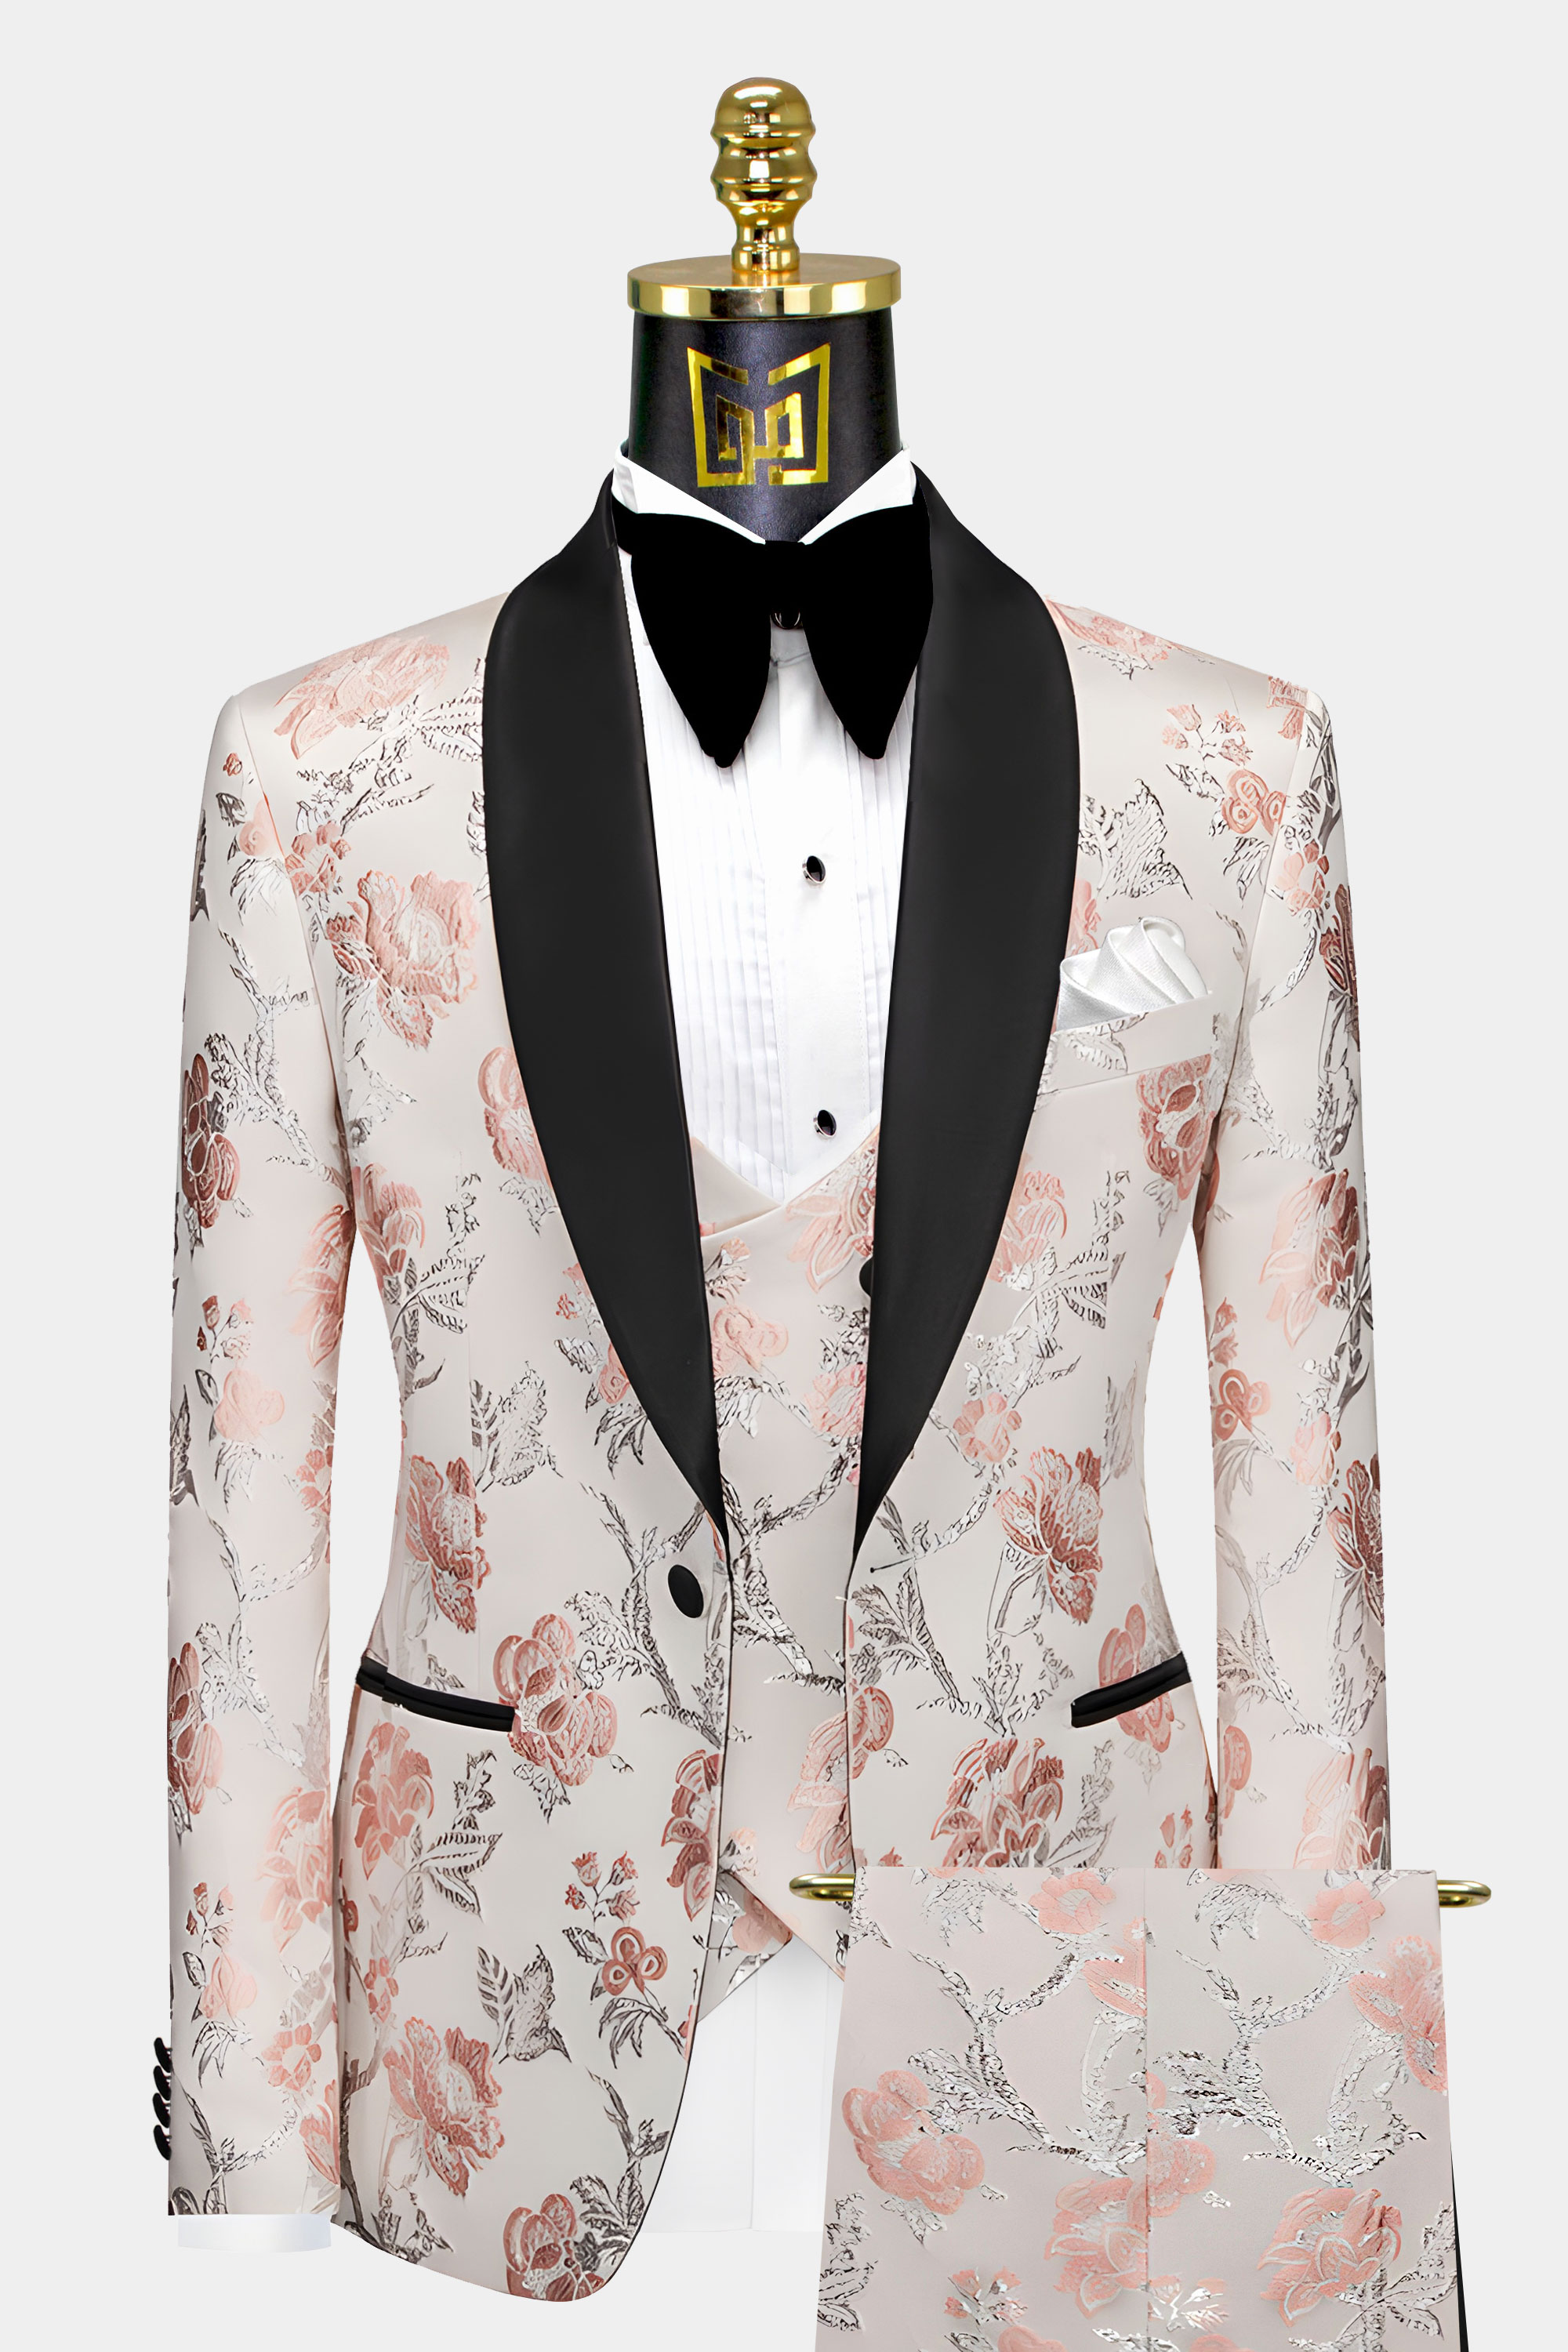 Mens-Rose-Gold-and-Black-Tuxedo-Wedding-Groom-Prom-Suit-from-Gentlemansguru.com